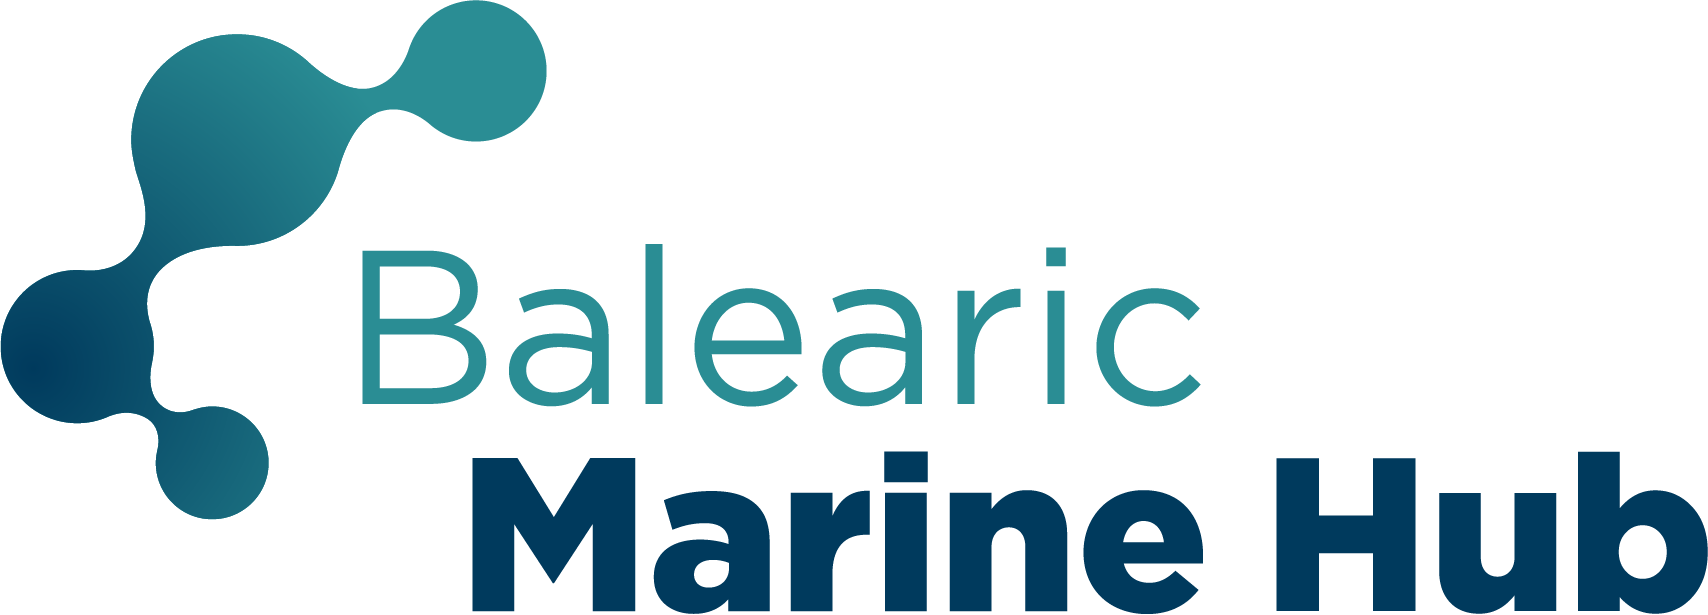 Balearic Marine logo